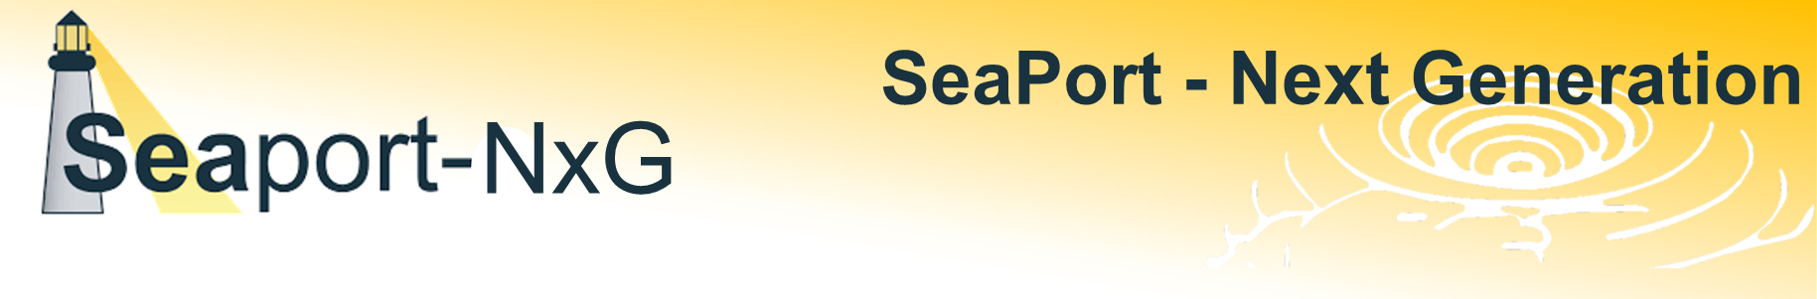 SeaPort - Next Generation